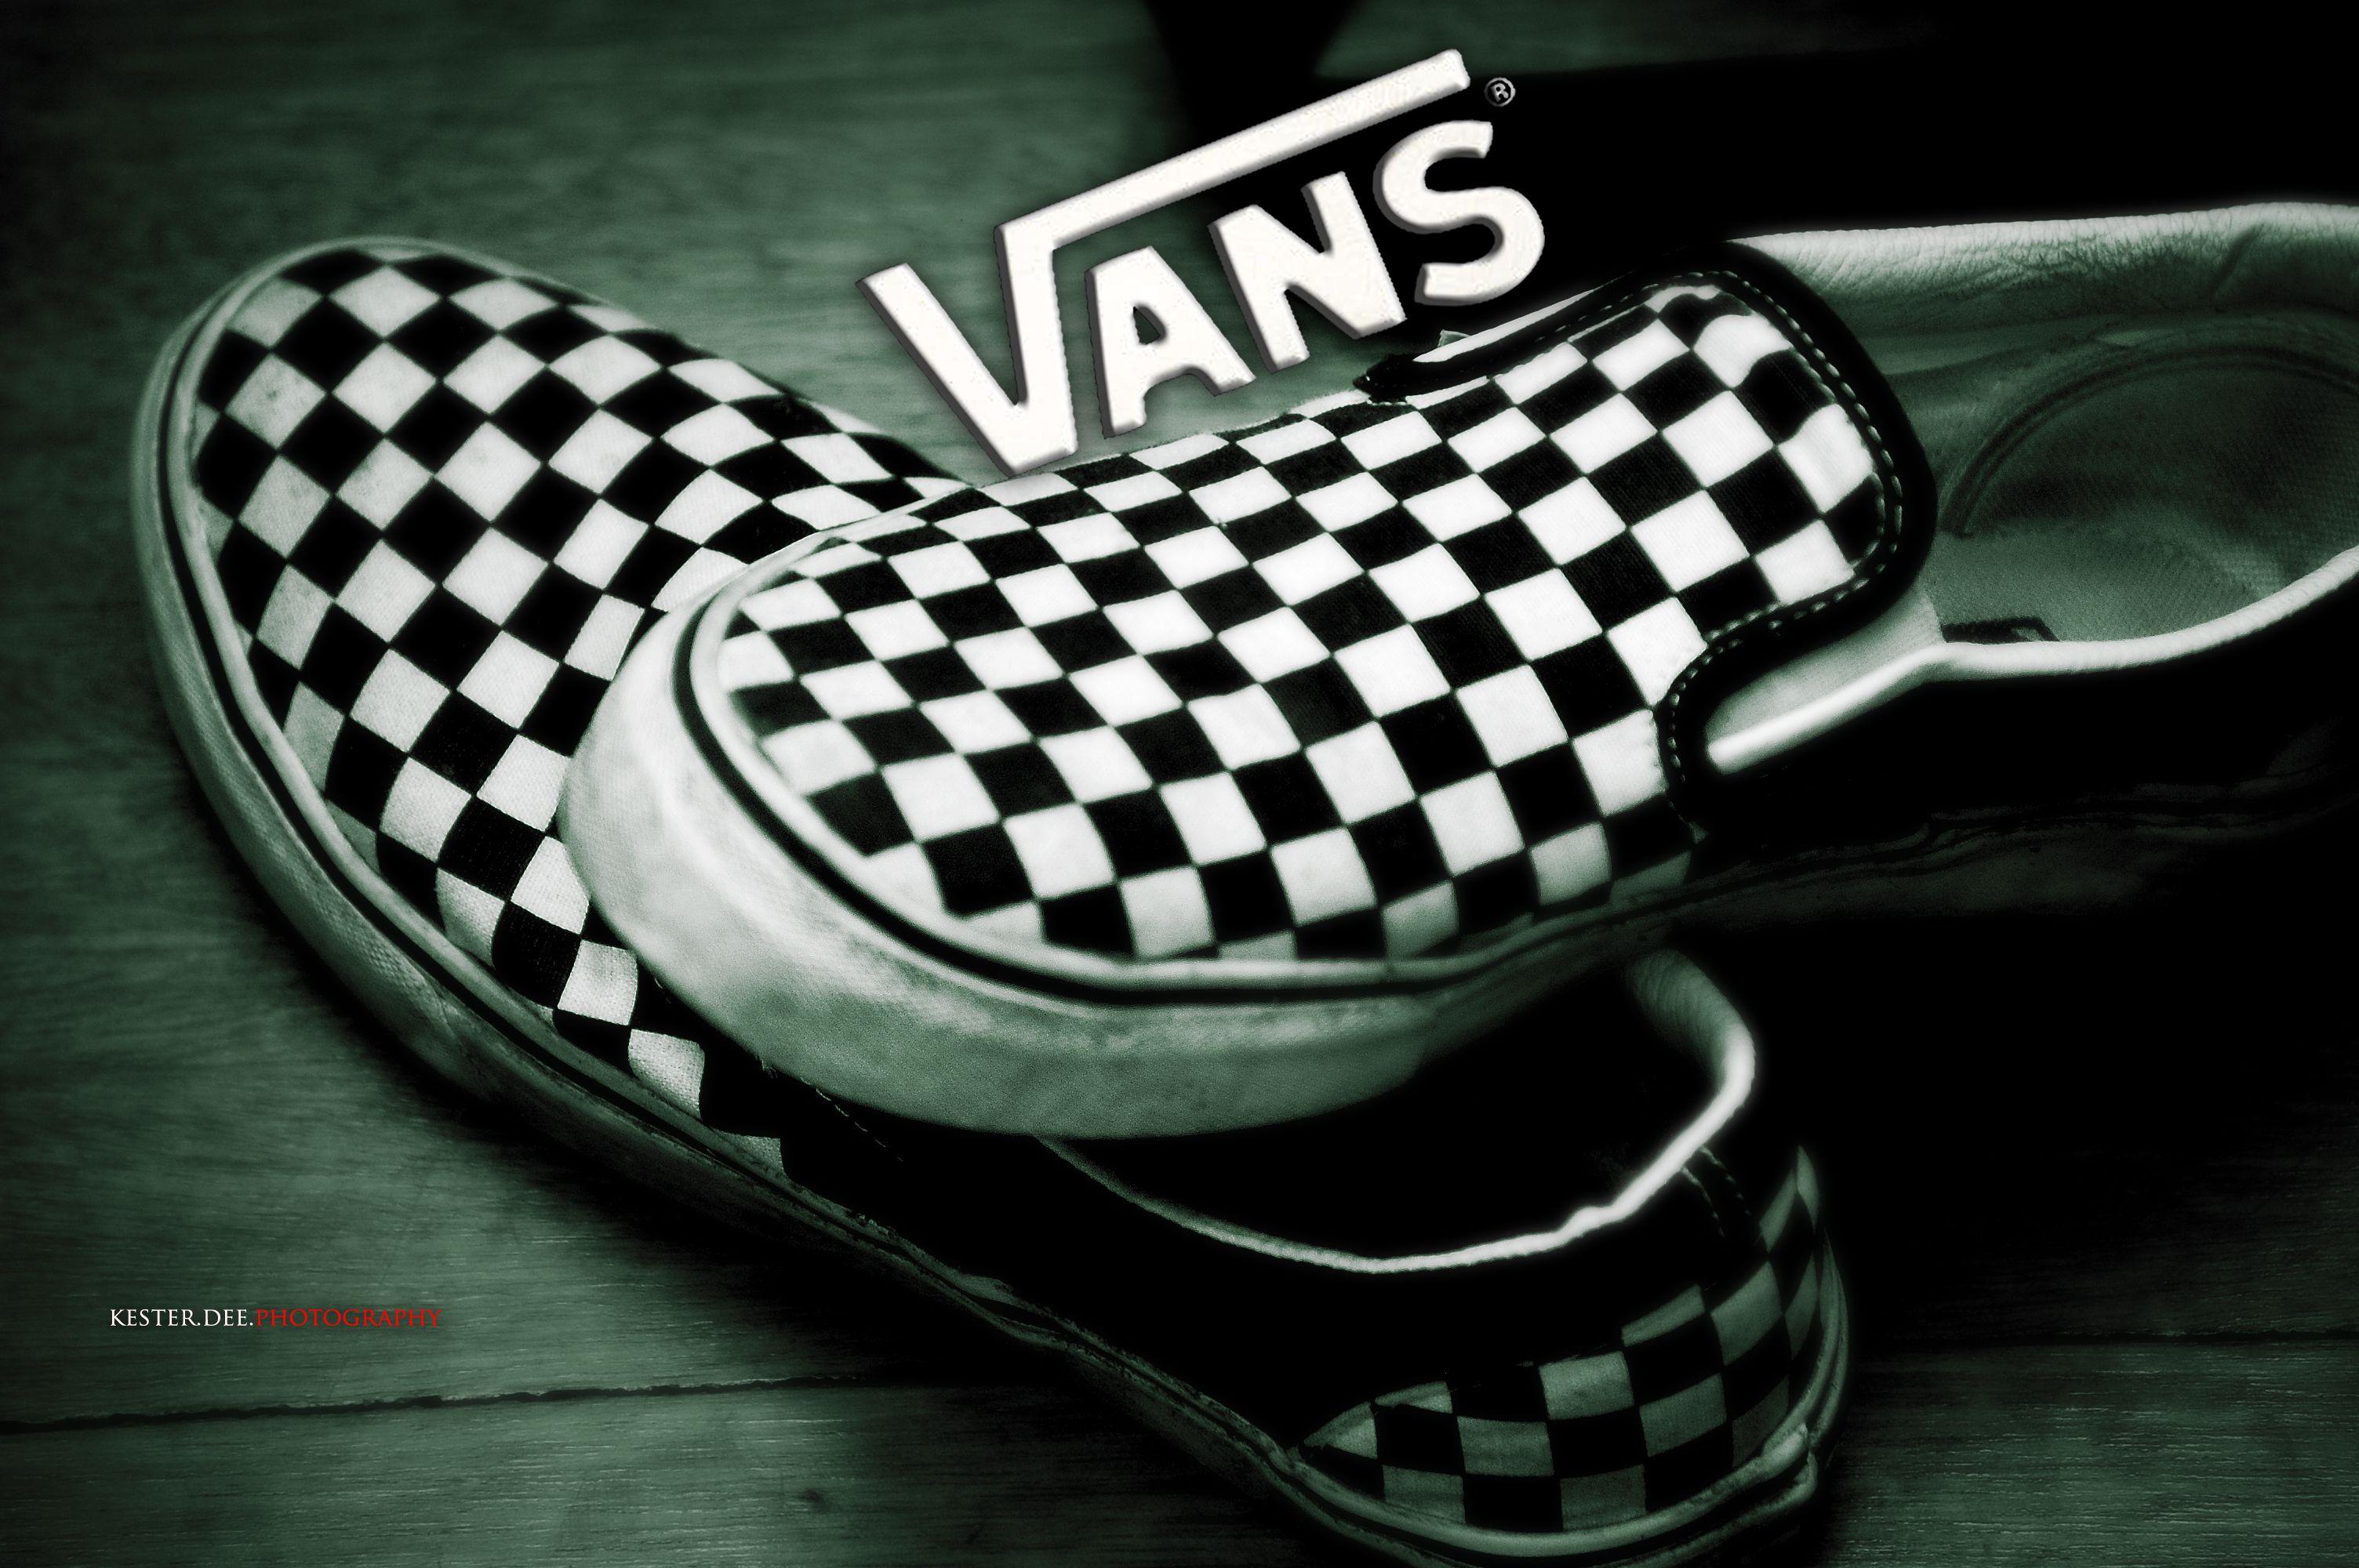 Vans Shoes Wallpapers - Wallpaper Cave